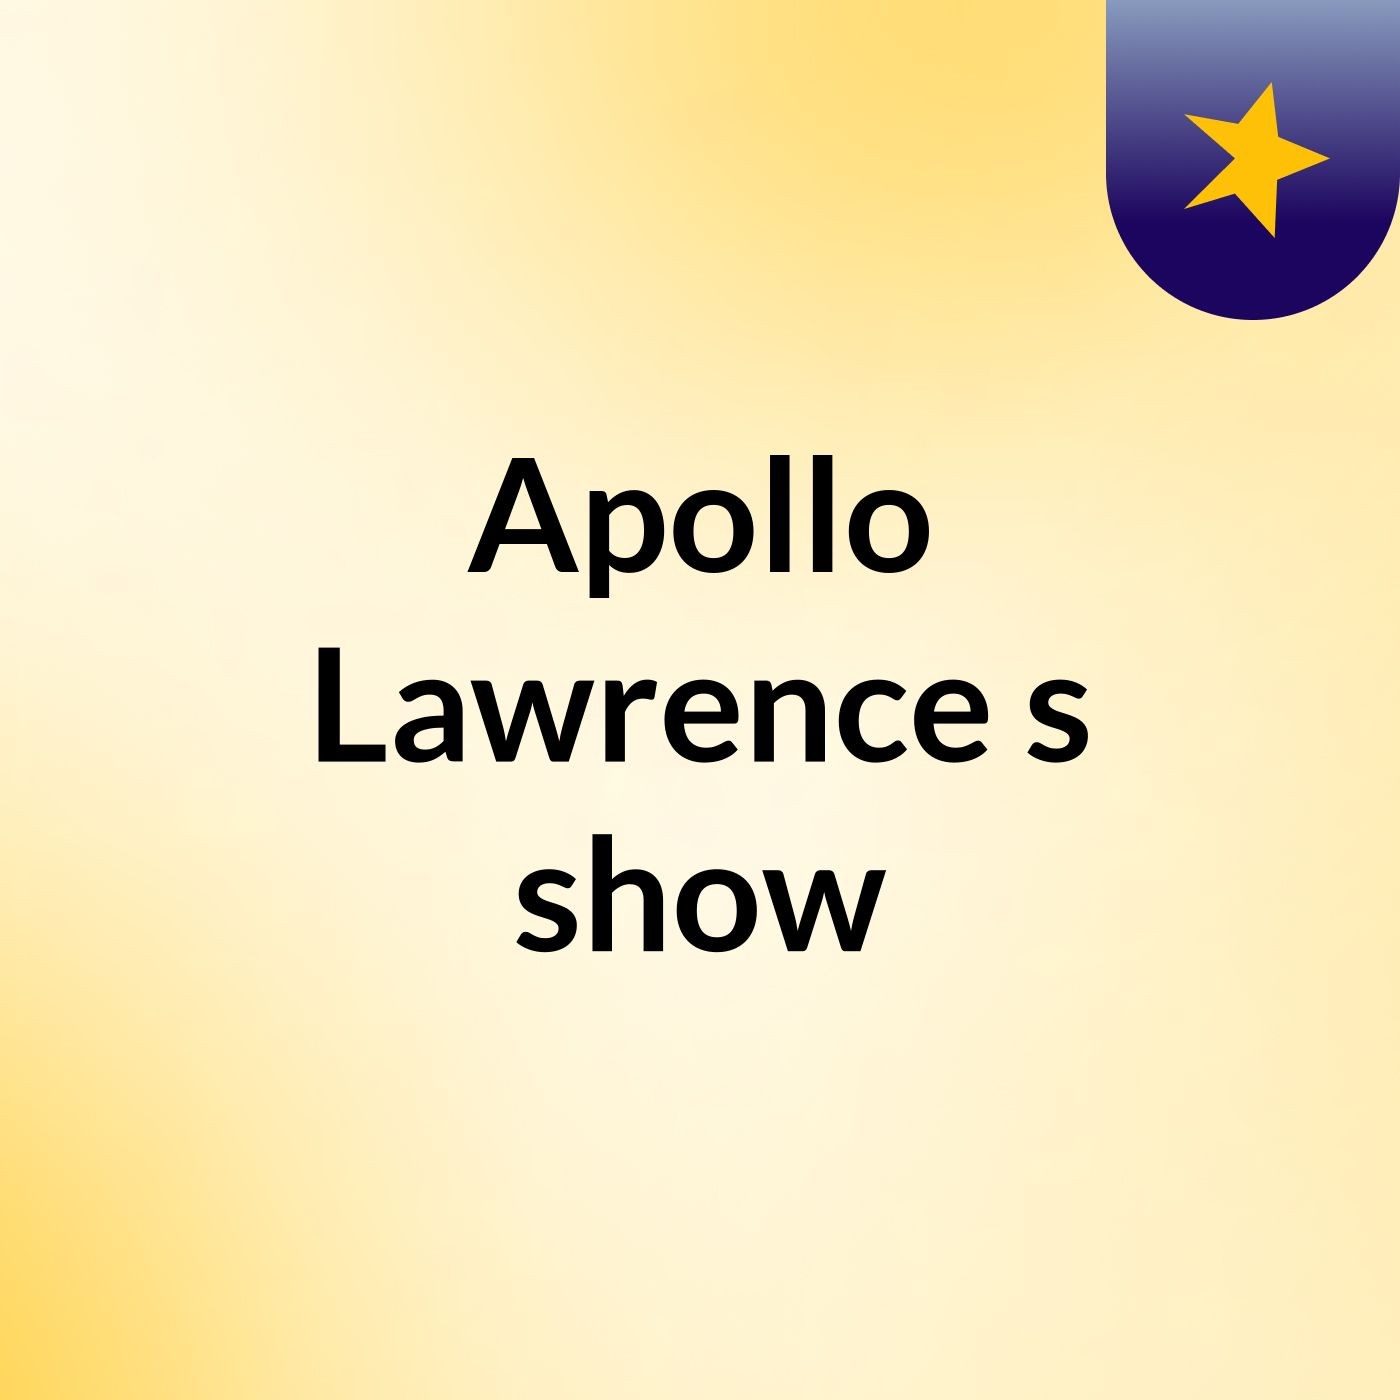 Apollo Lawrence's show